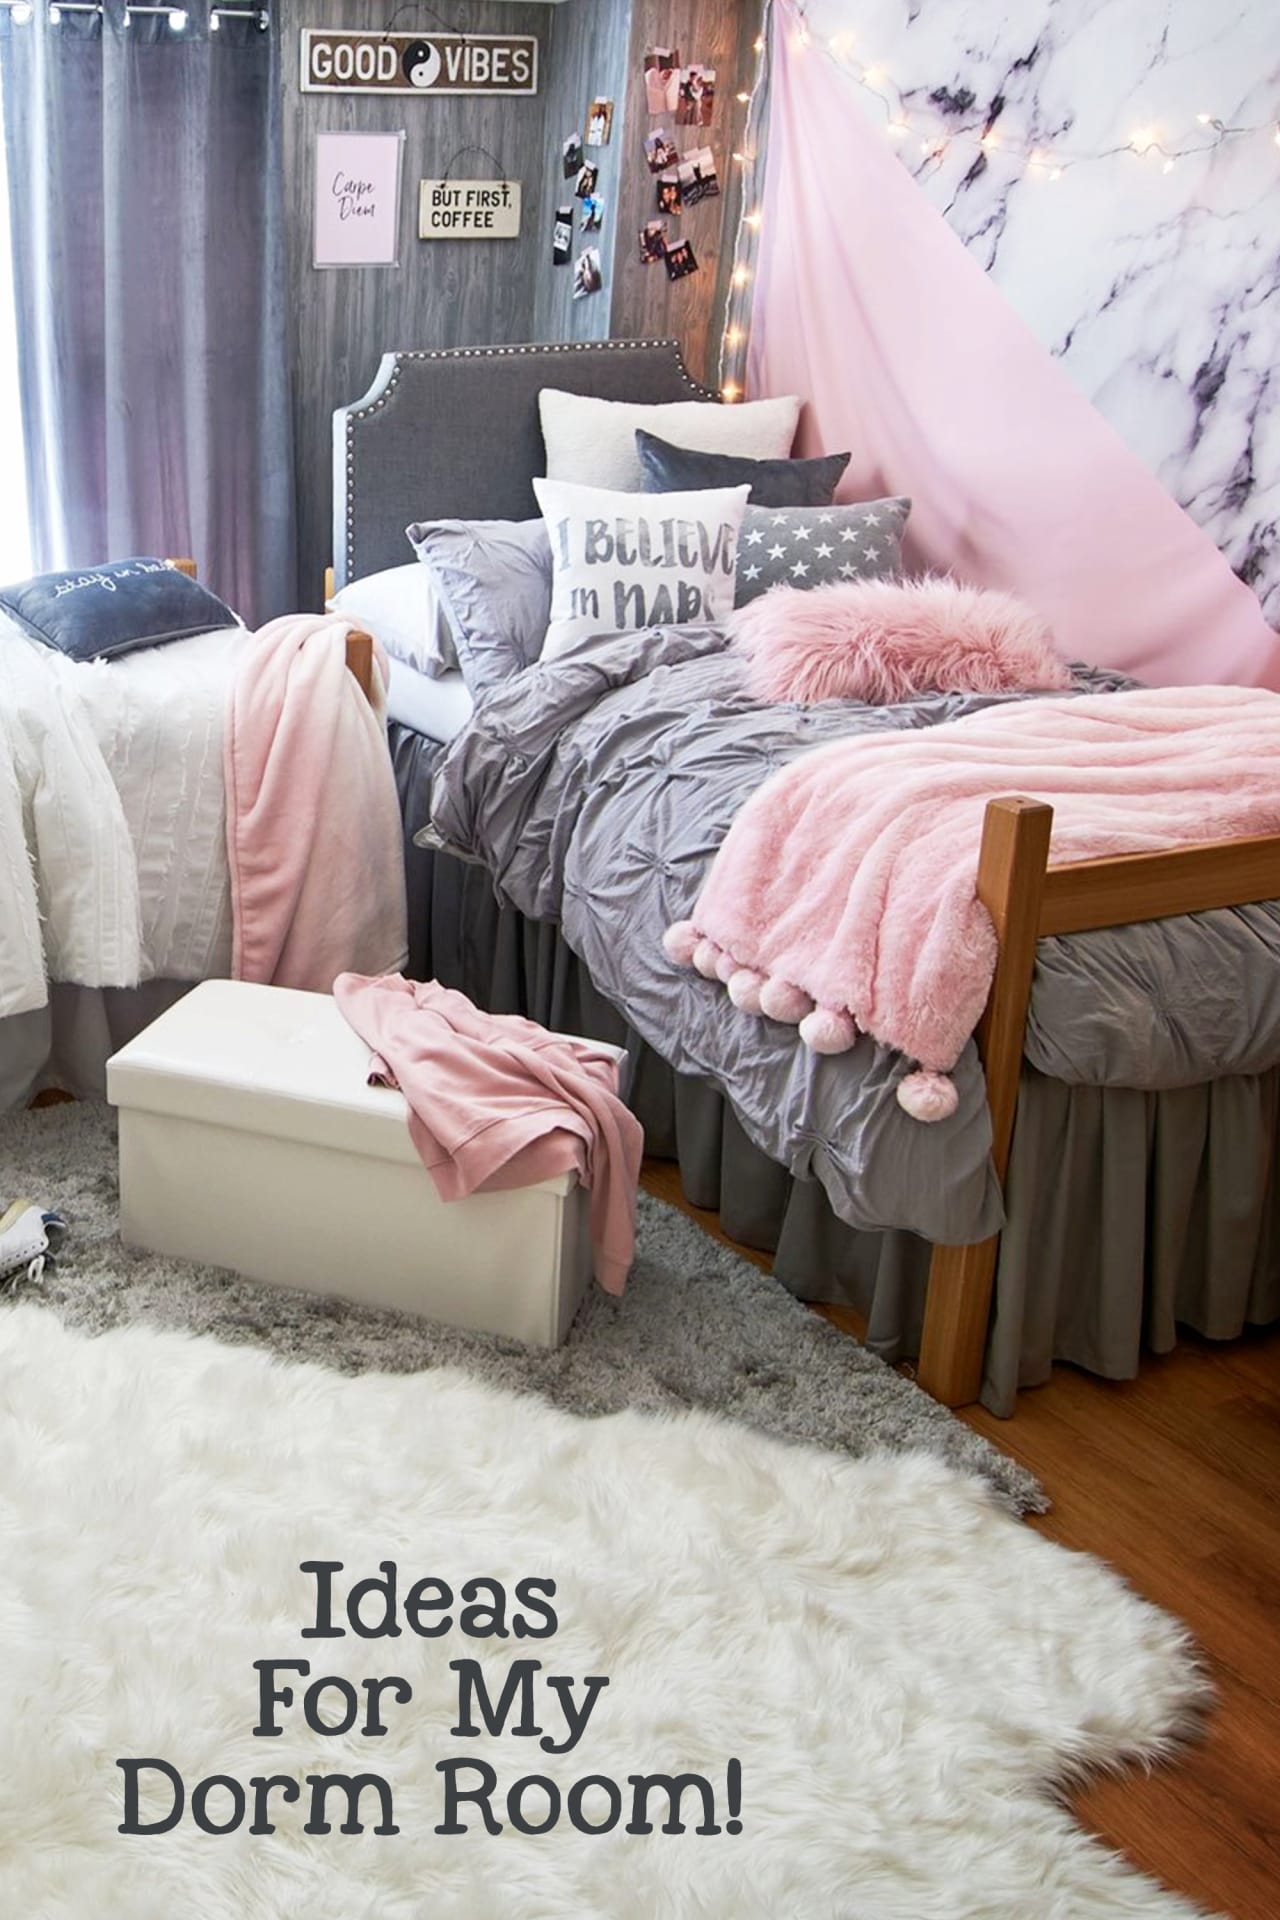 Dorm Room Ideas!  Dorm room decorating ideas for college roomates - cute matching dorm bedding ideas